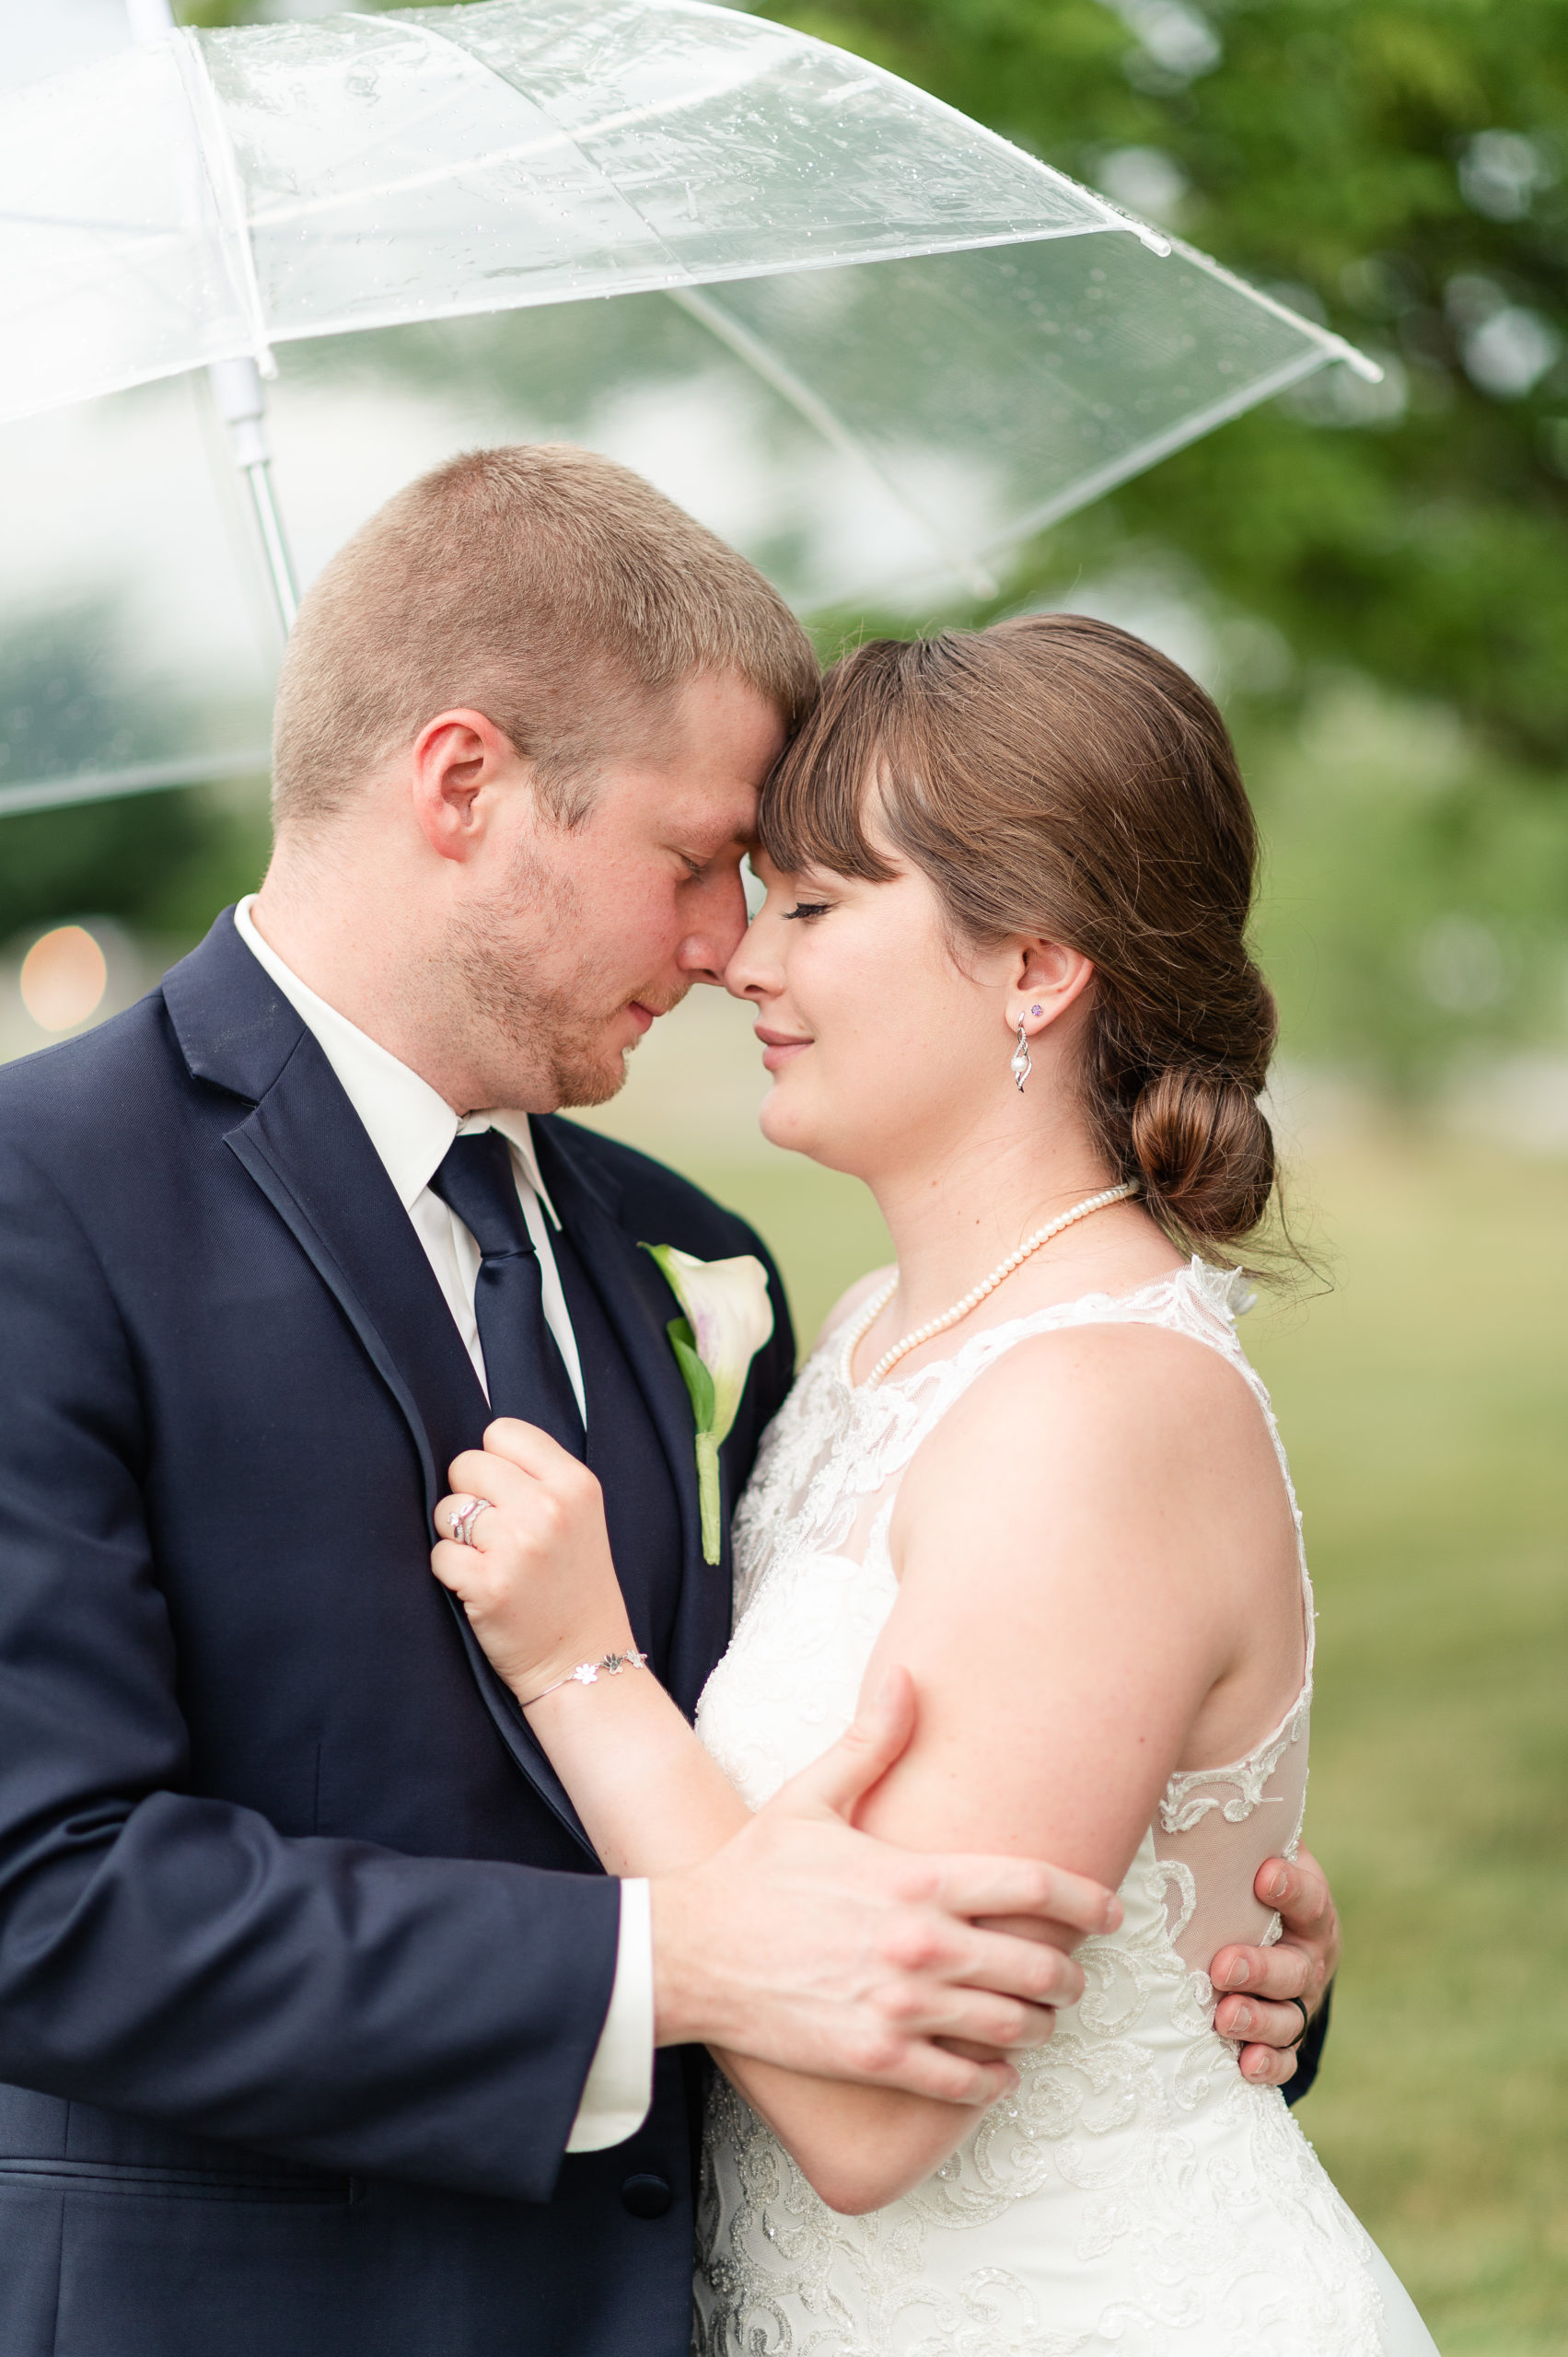 Rainy wedding in Lafayette, IN 